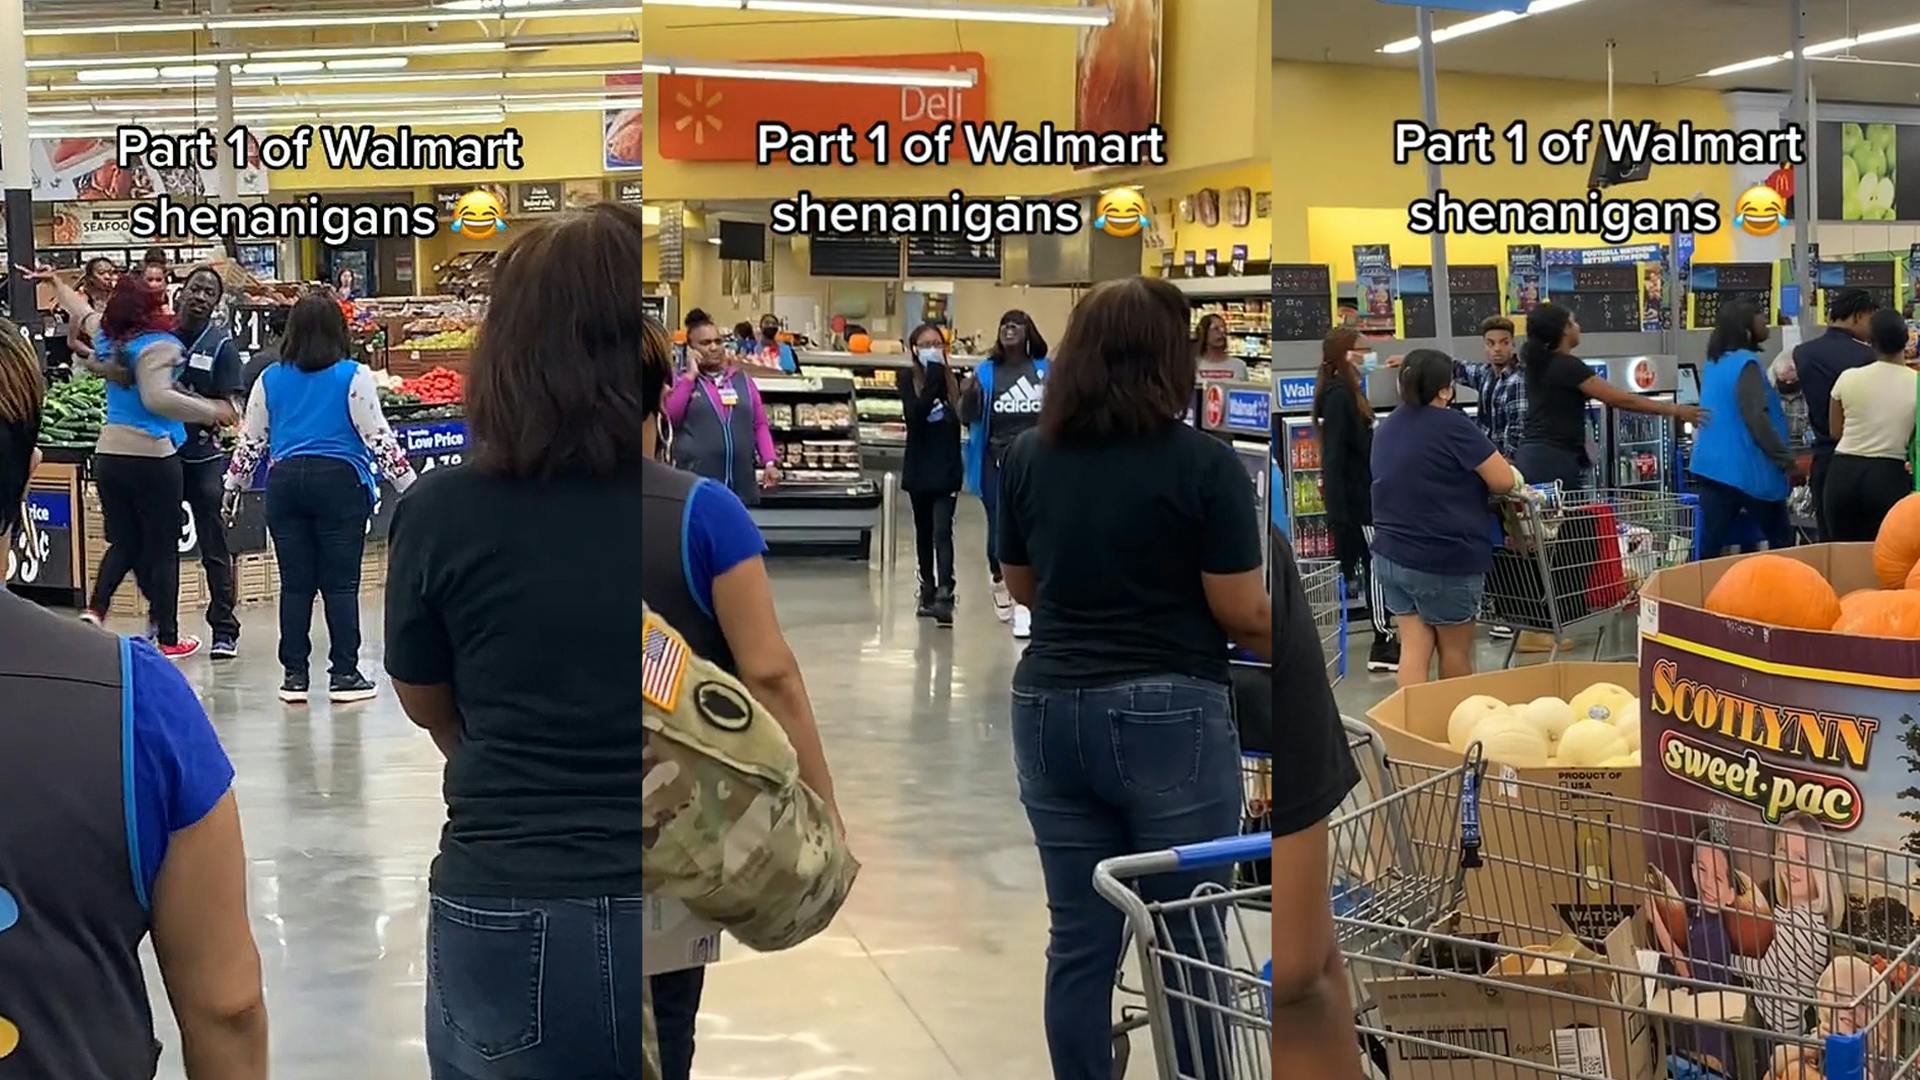 Walmart employees escorting yelling employee out of store caption "Part 1 of Walmart shenanigans" (l) Walmart employees escorting other yelling employee out of store caption "Part 1 of Walmart shenanigans" (c) Walmart employees escorting yelling employee through checkout out of store caption "Part 1 of Walmart shenanigans" (r)